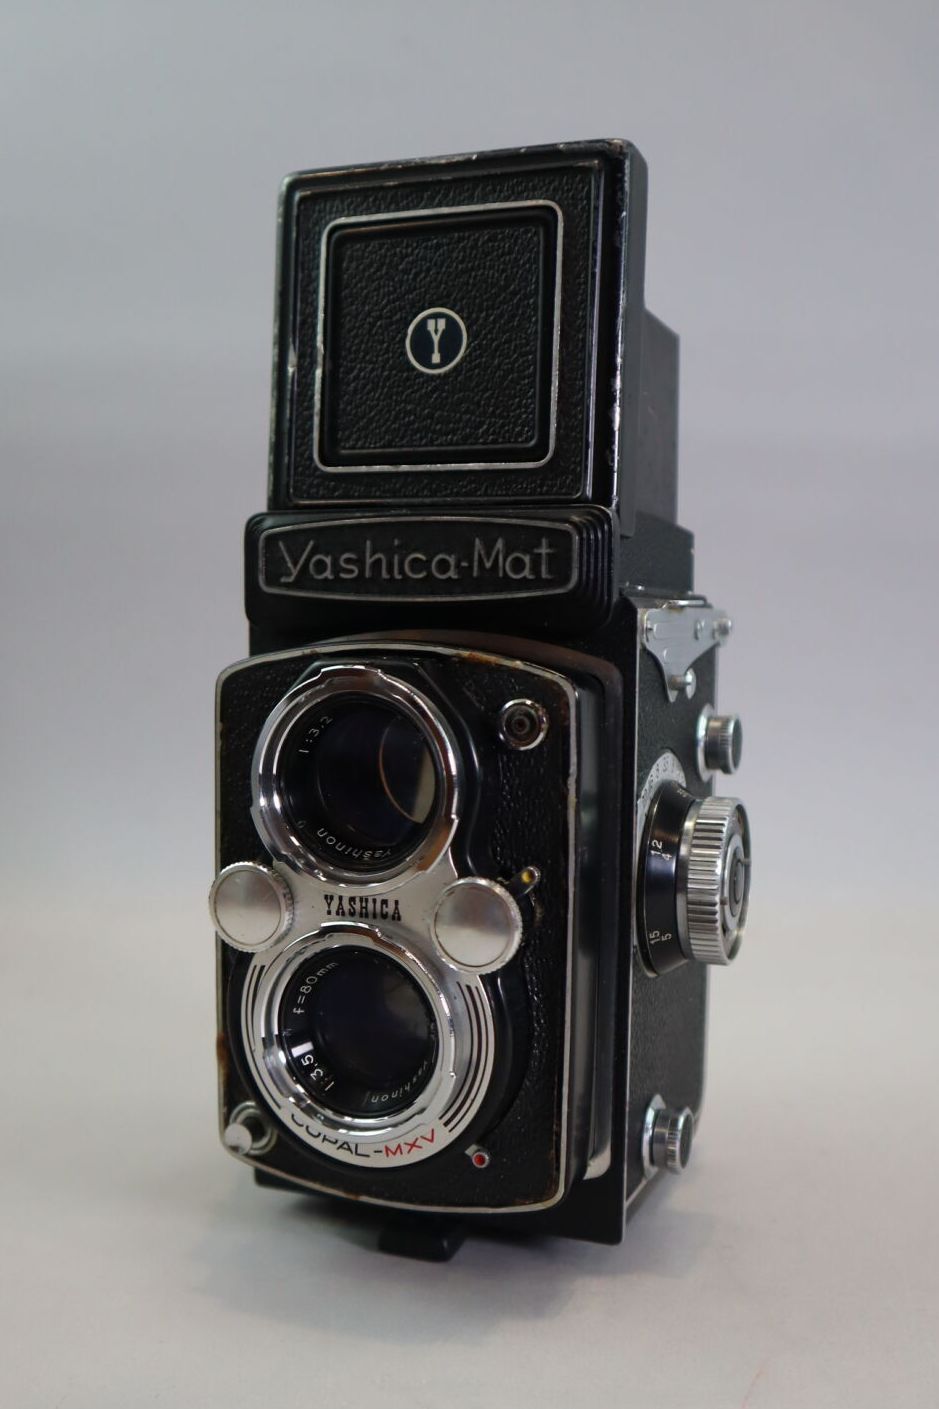 Null YASHICA-MAT.相机型号 Copal-MXV。镜头 1 : 3.5 / f=80 mm

原样
不保证操作